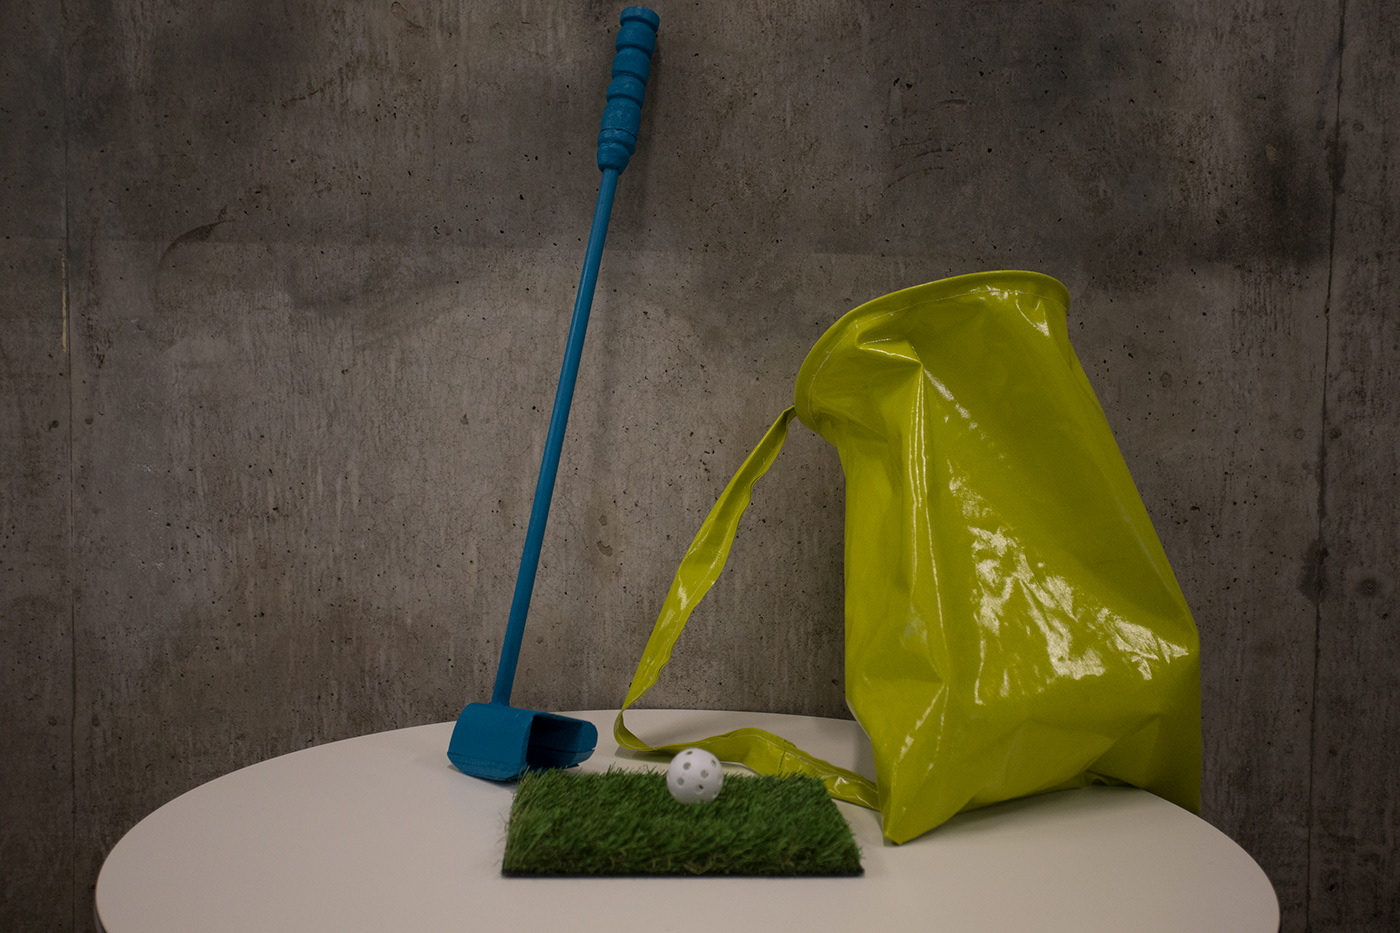 golf game kids Fun product design unconventional minigolf